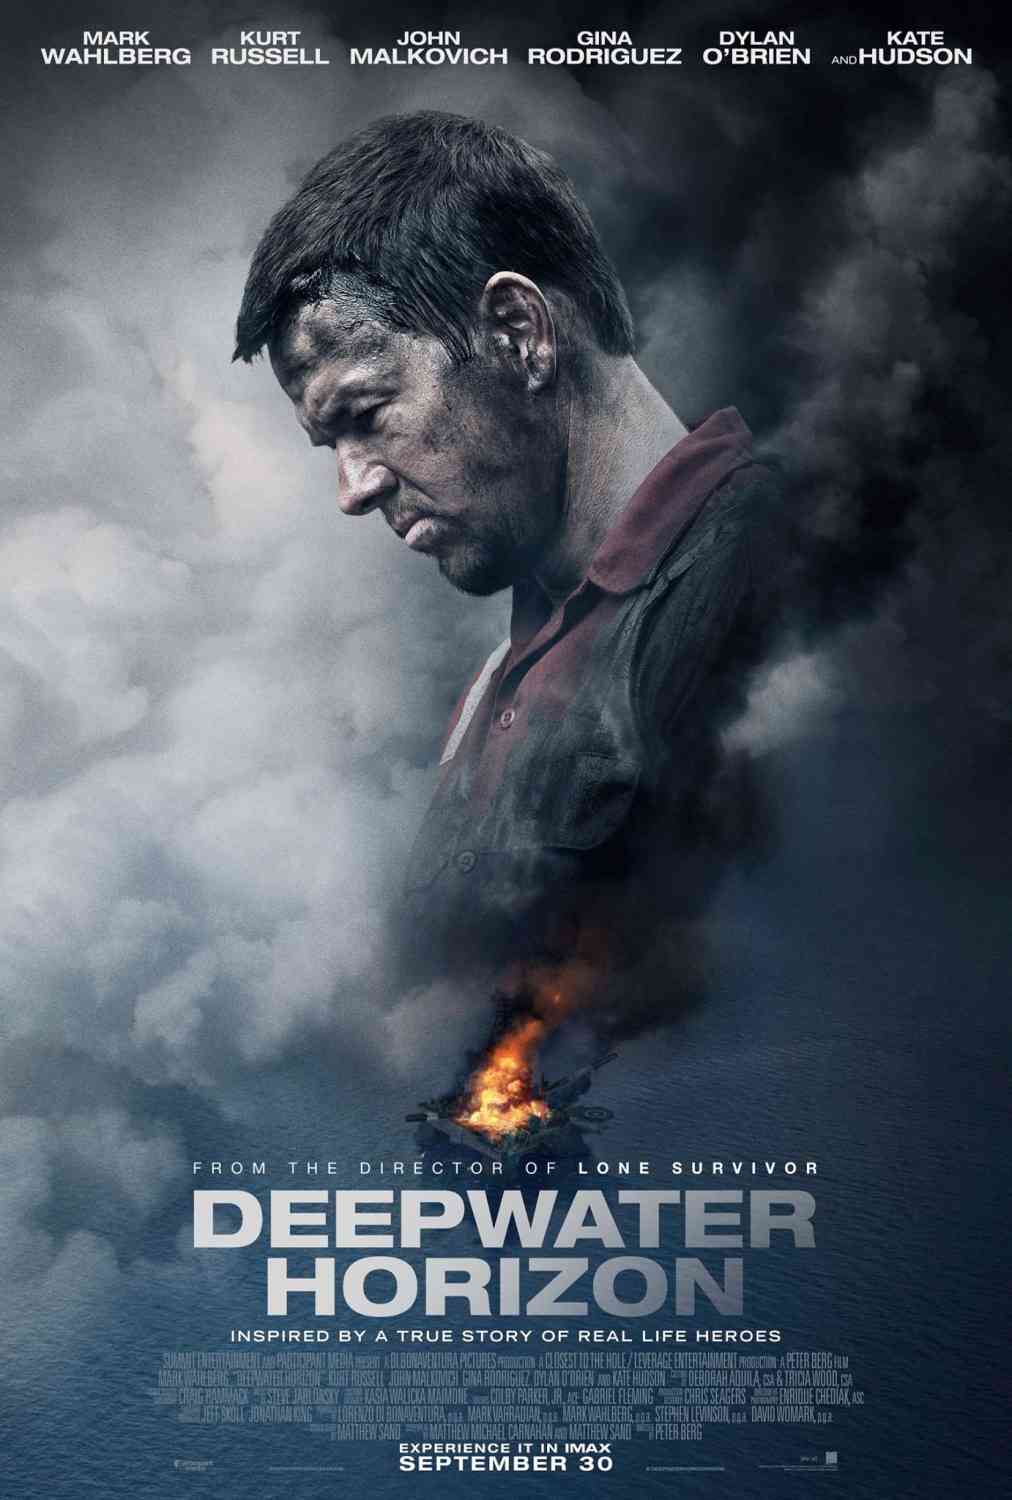 FULL MOVIE: Deepwater Horizon (2016) [Action]